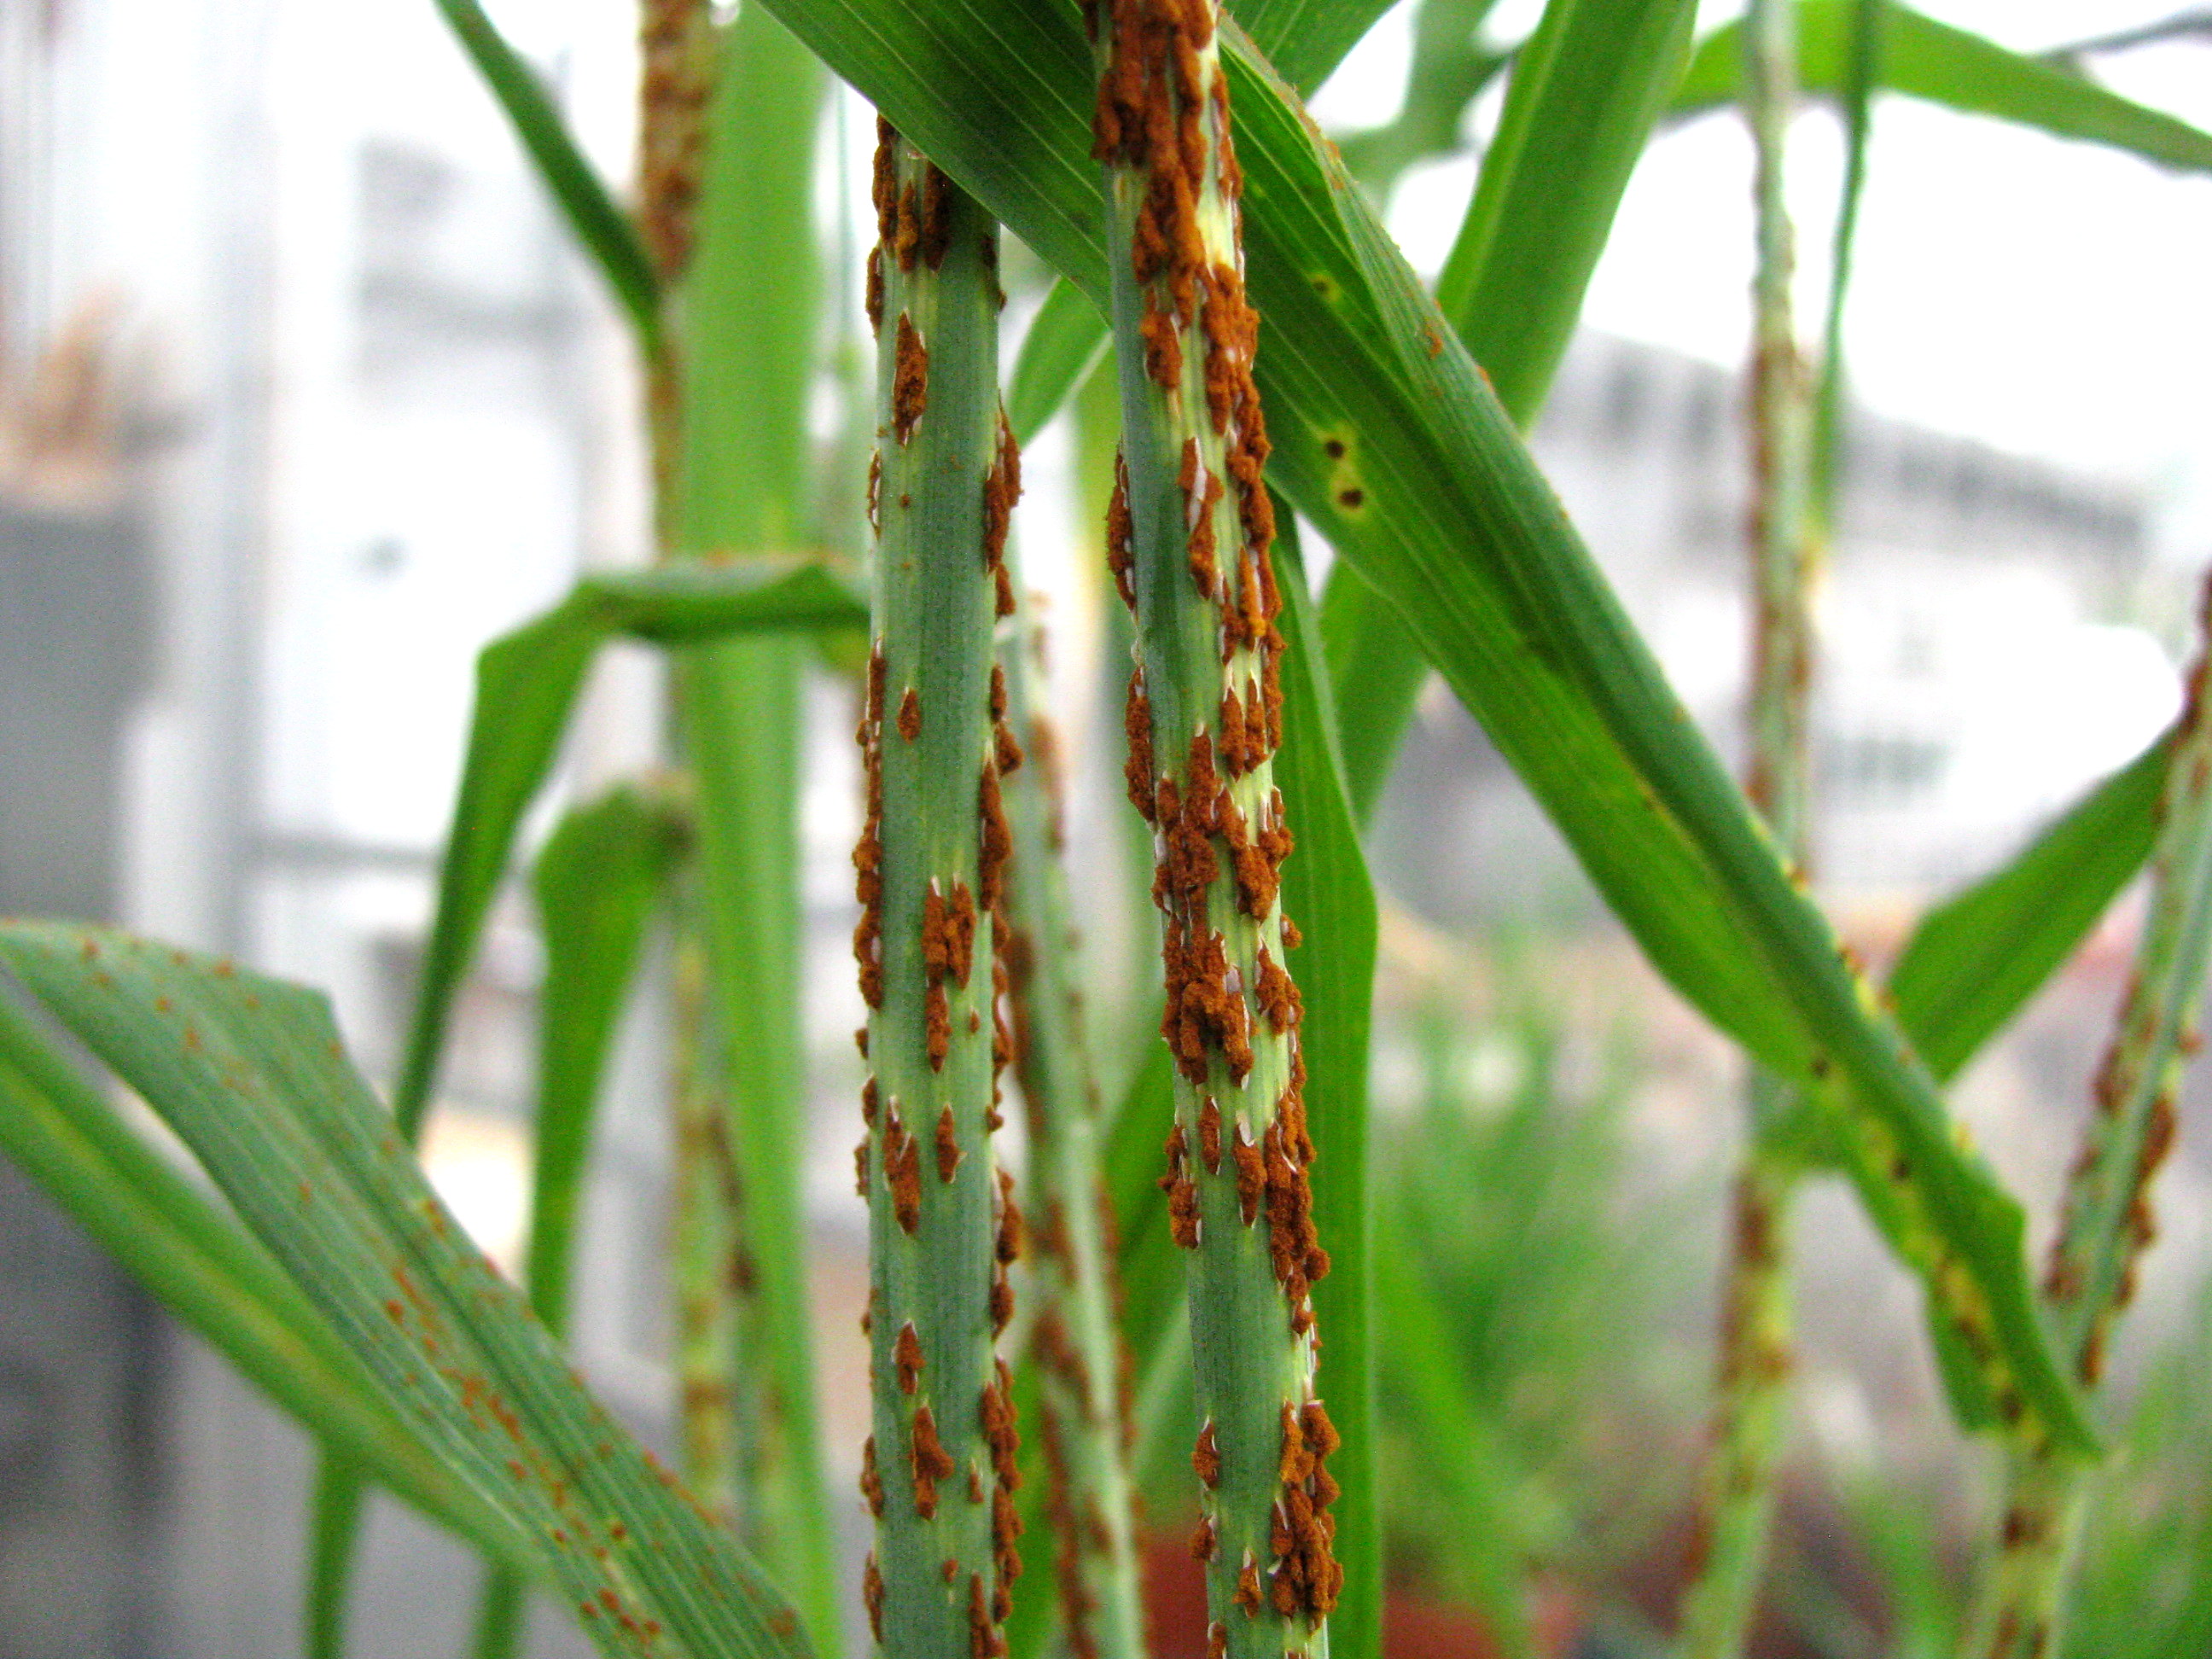 Stem rust on wheat, caused by Puccinia graminis f. sp. tritici. Credit: Prof Zacharias Pretorius